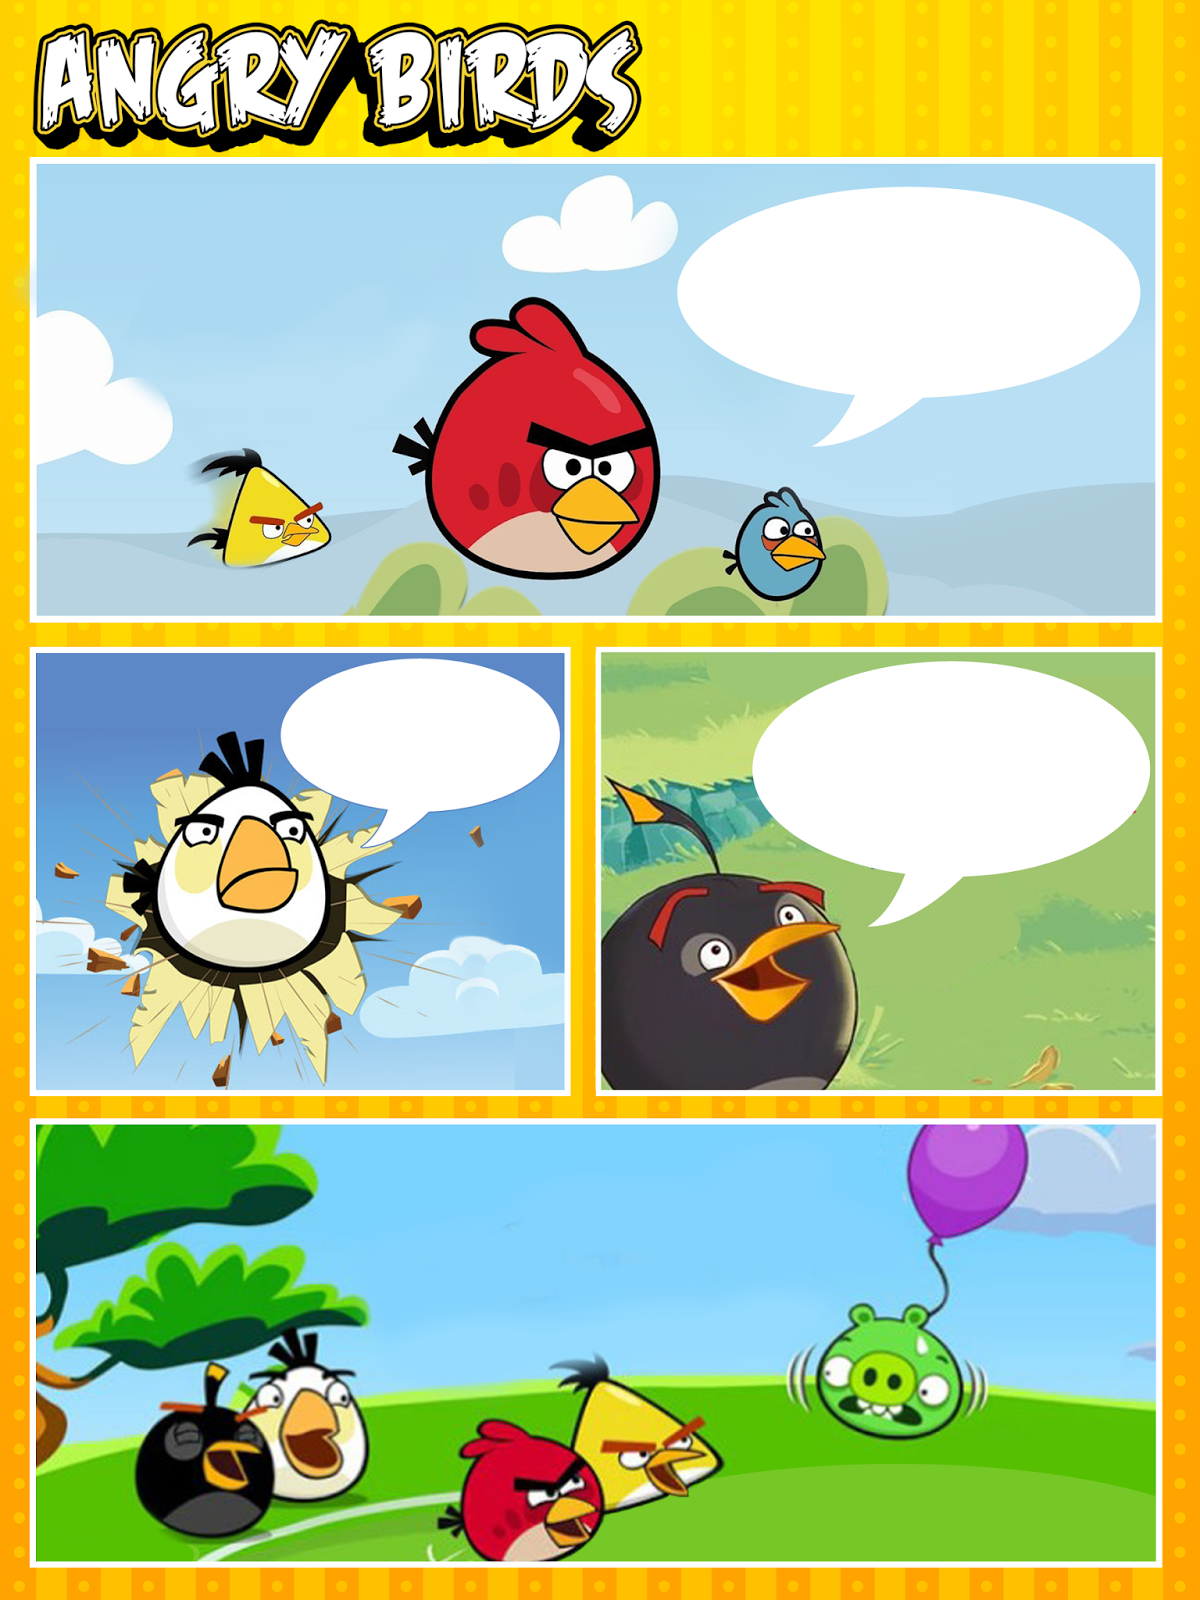 So Original Angry Birds Free Printable Invitations Frames Or Cards 